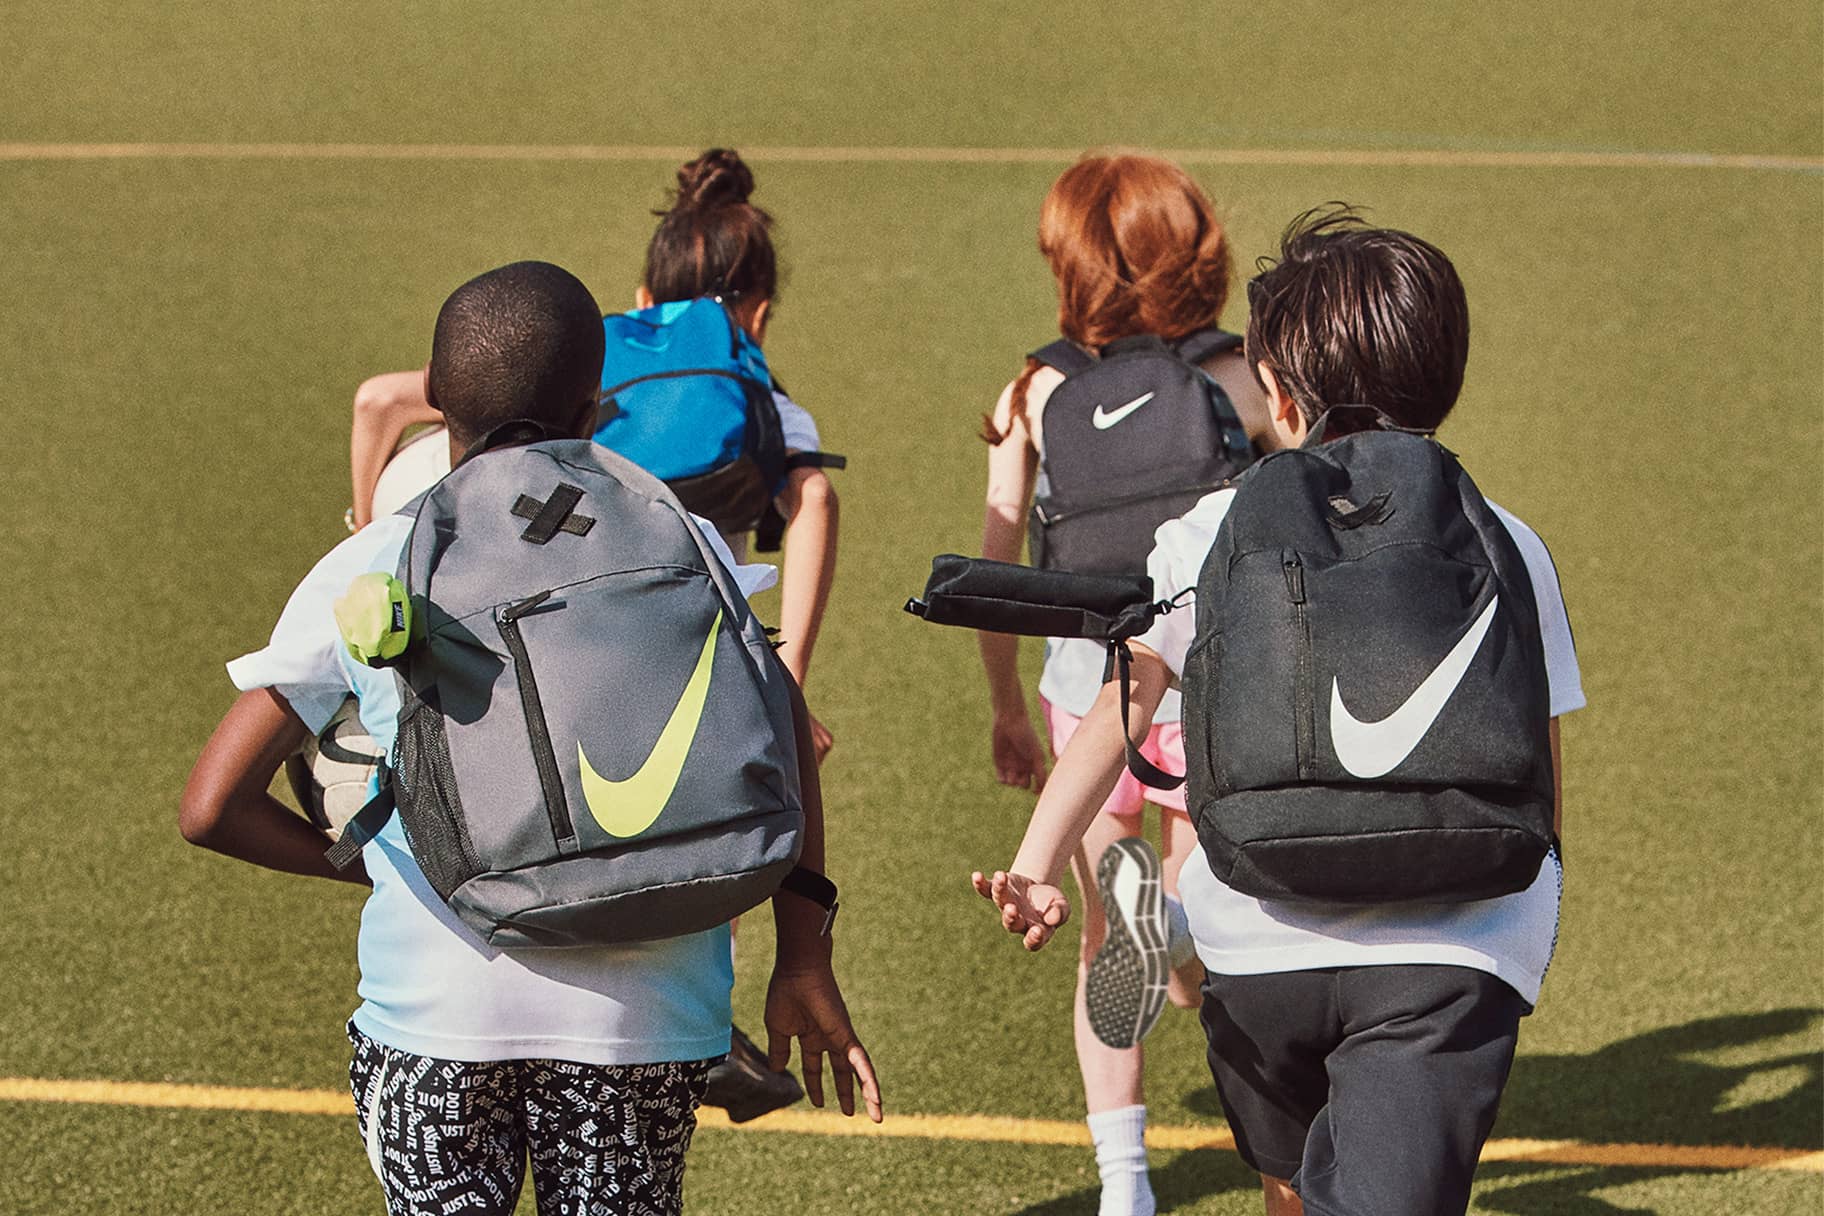 The Best Nike Kids' Backpacks for Back to School. Nike PH